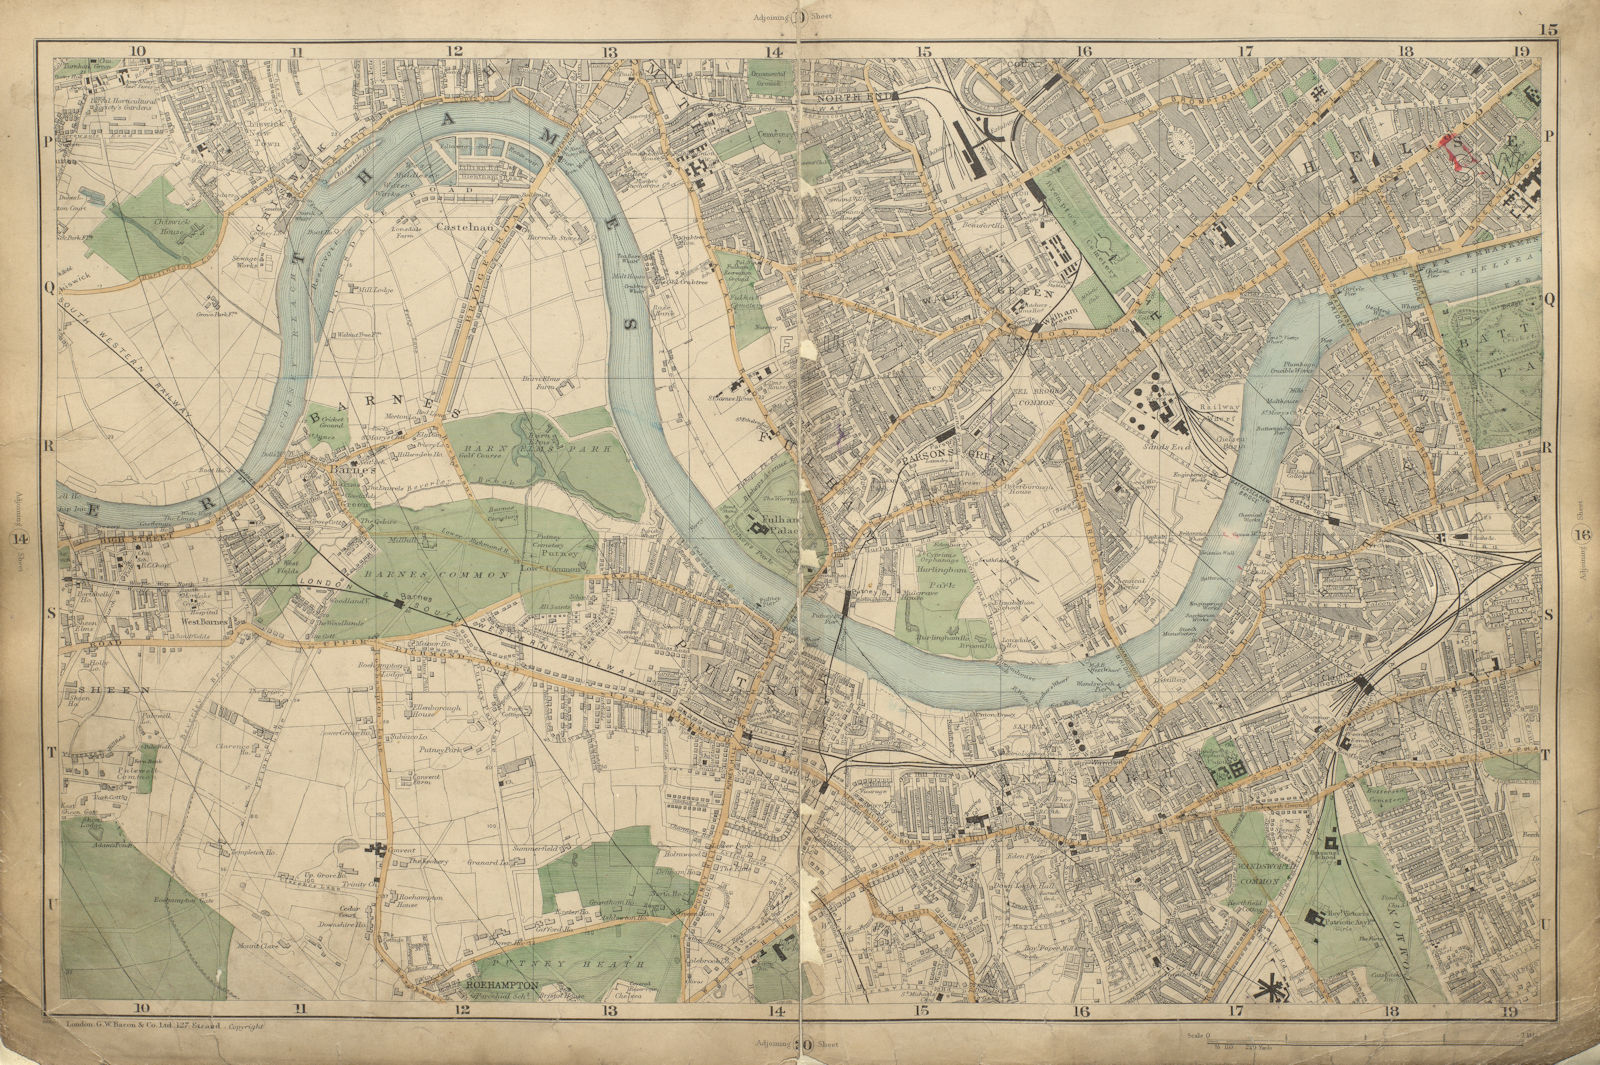 LONDON Chiswick Barnes Chelsea Fulham Putney Wandsworth Clapham BACON 1900 map